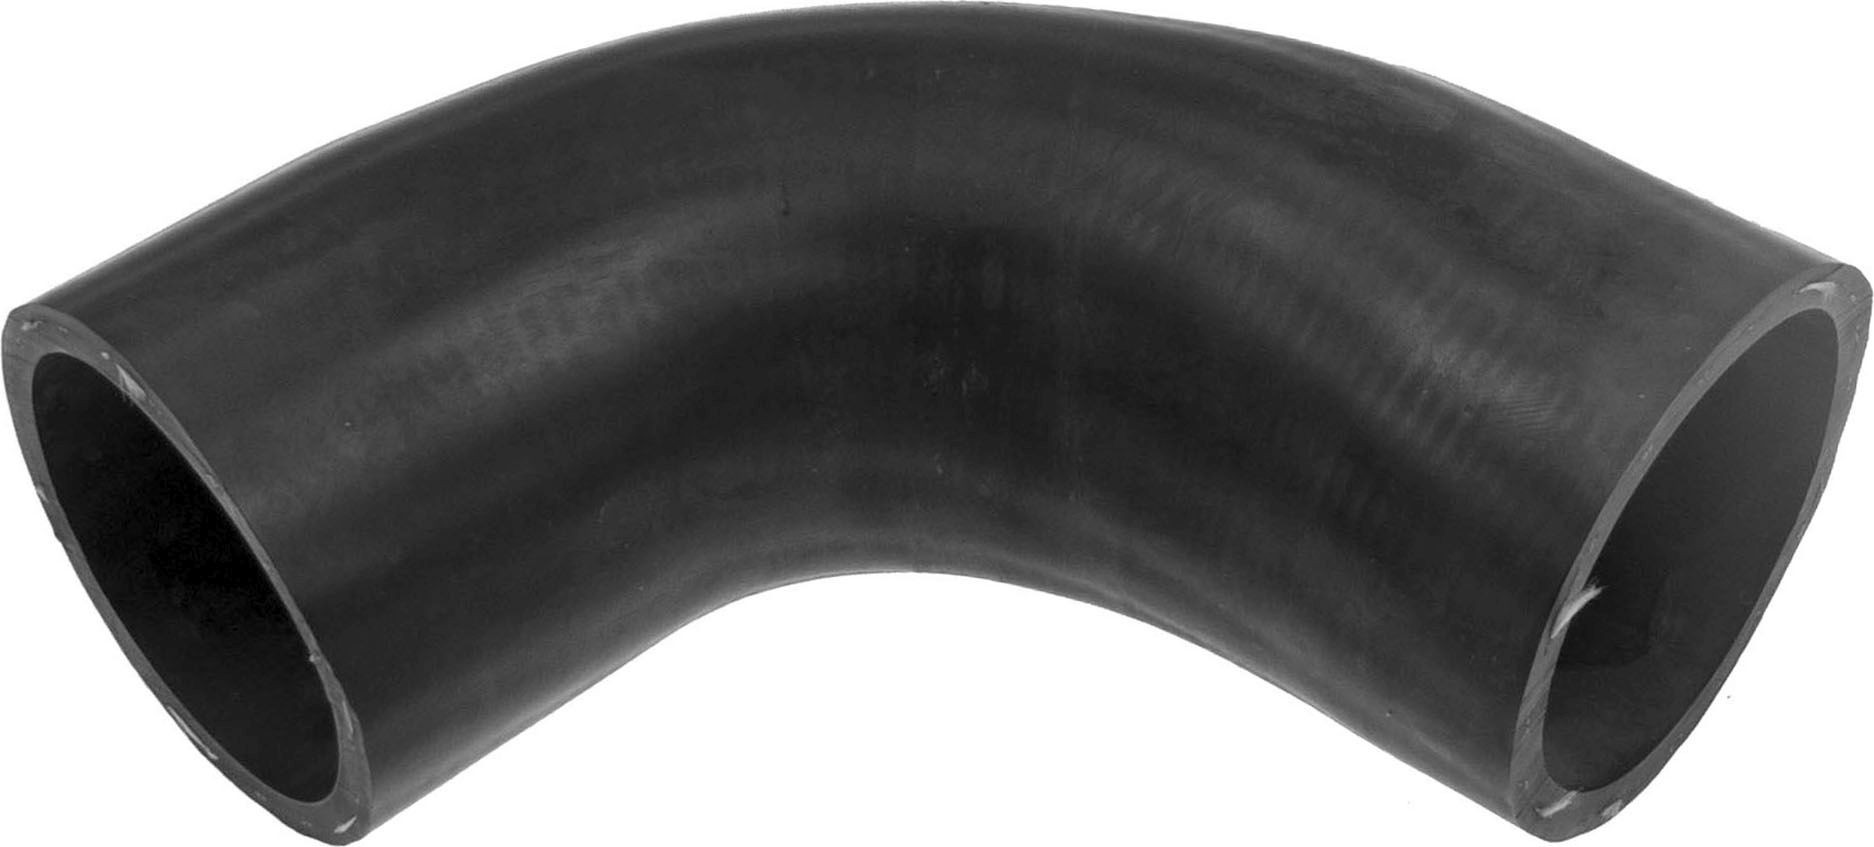 4275-53441 GATES EPDM (ethylene propylene diene Monomer (M-class) rubber) Hose Length: 205mm Coolant Hose 05-3441 buy